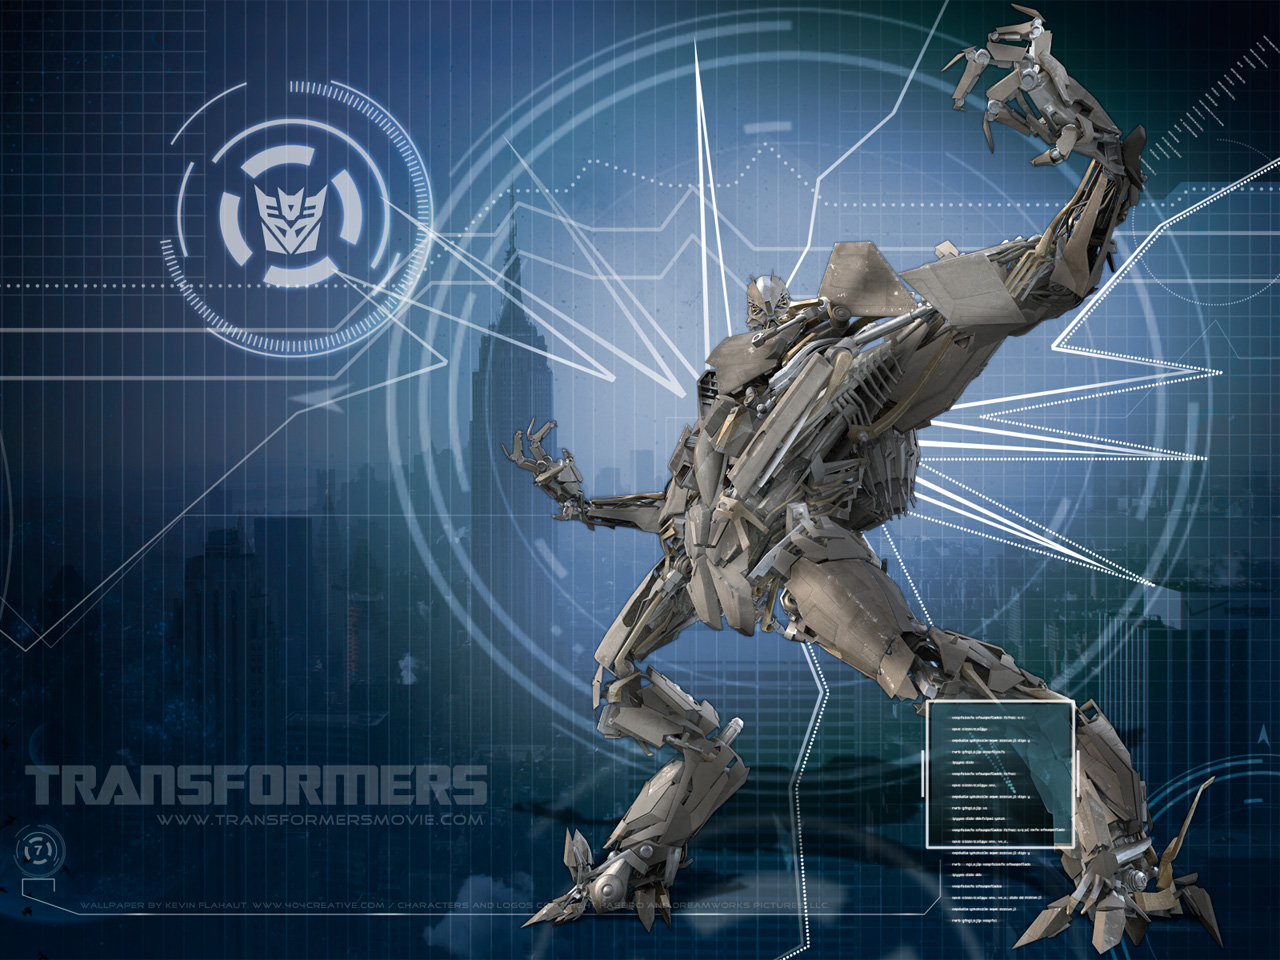 Transformers Movie Desktop Wallpaper